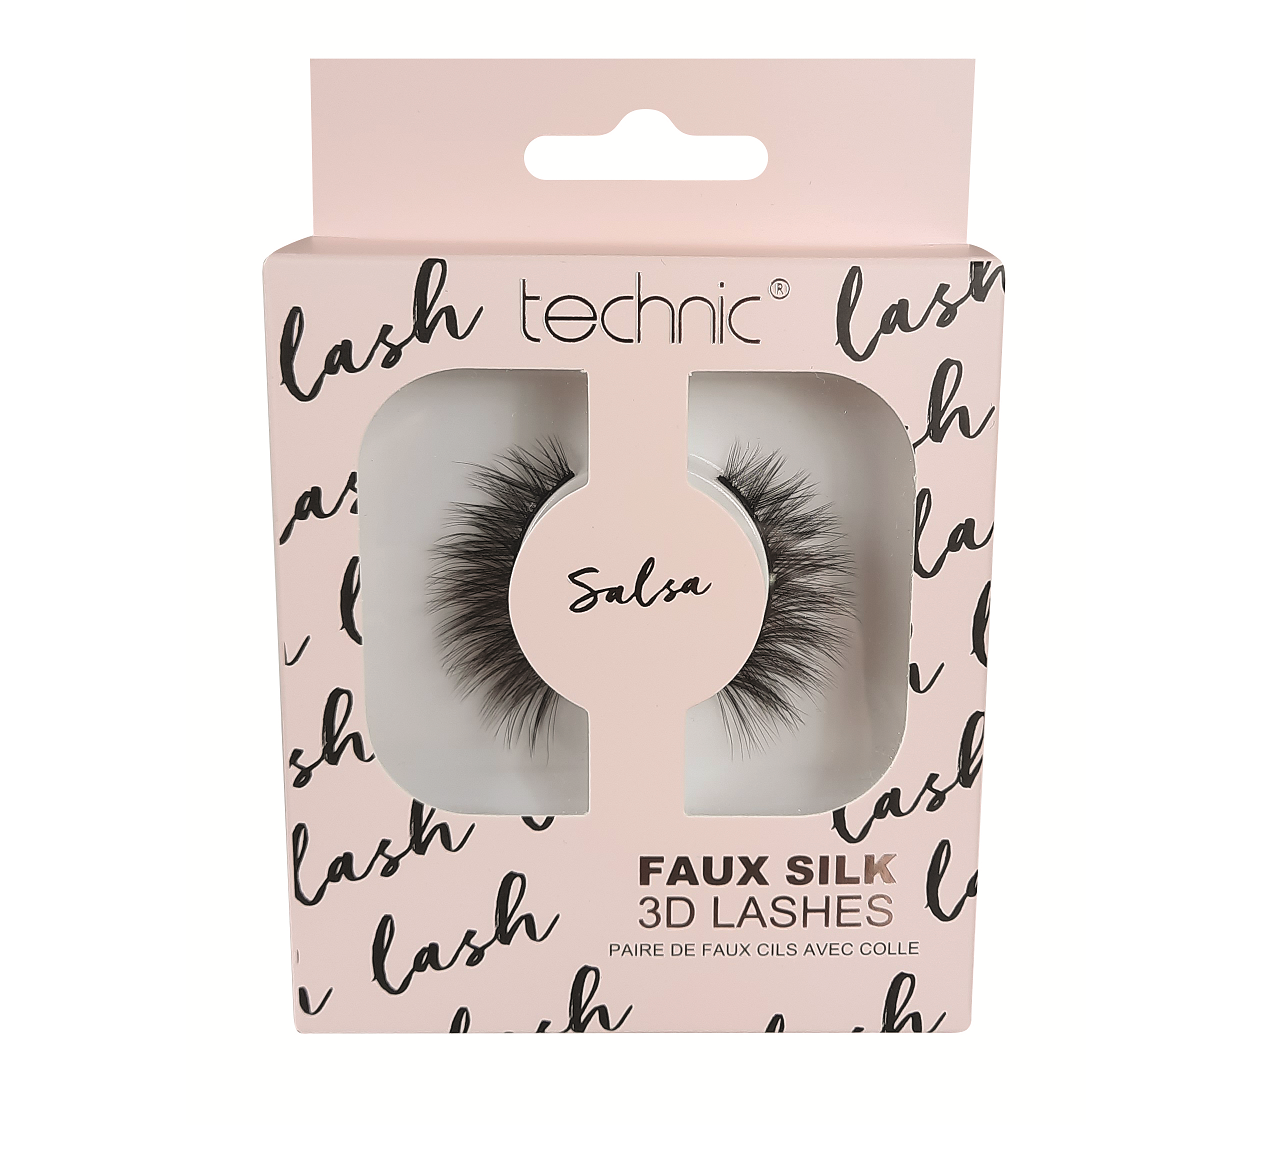 Technic Faux Silk Lashes - Salsa